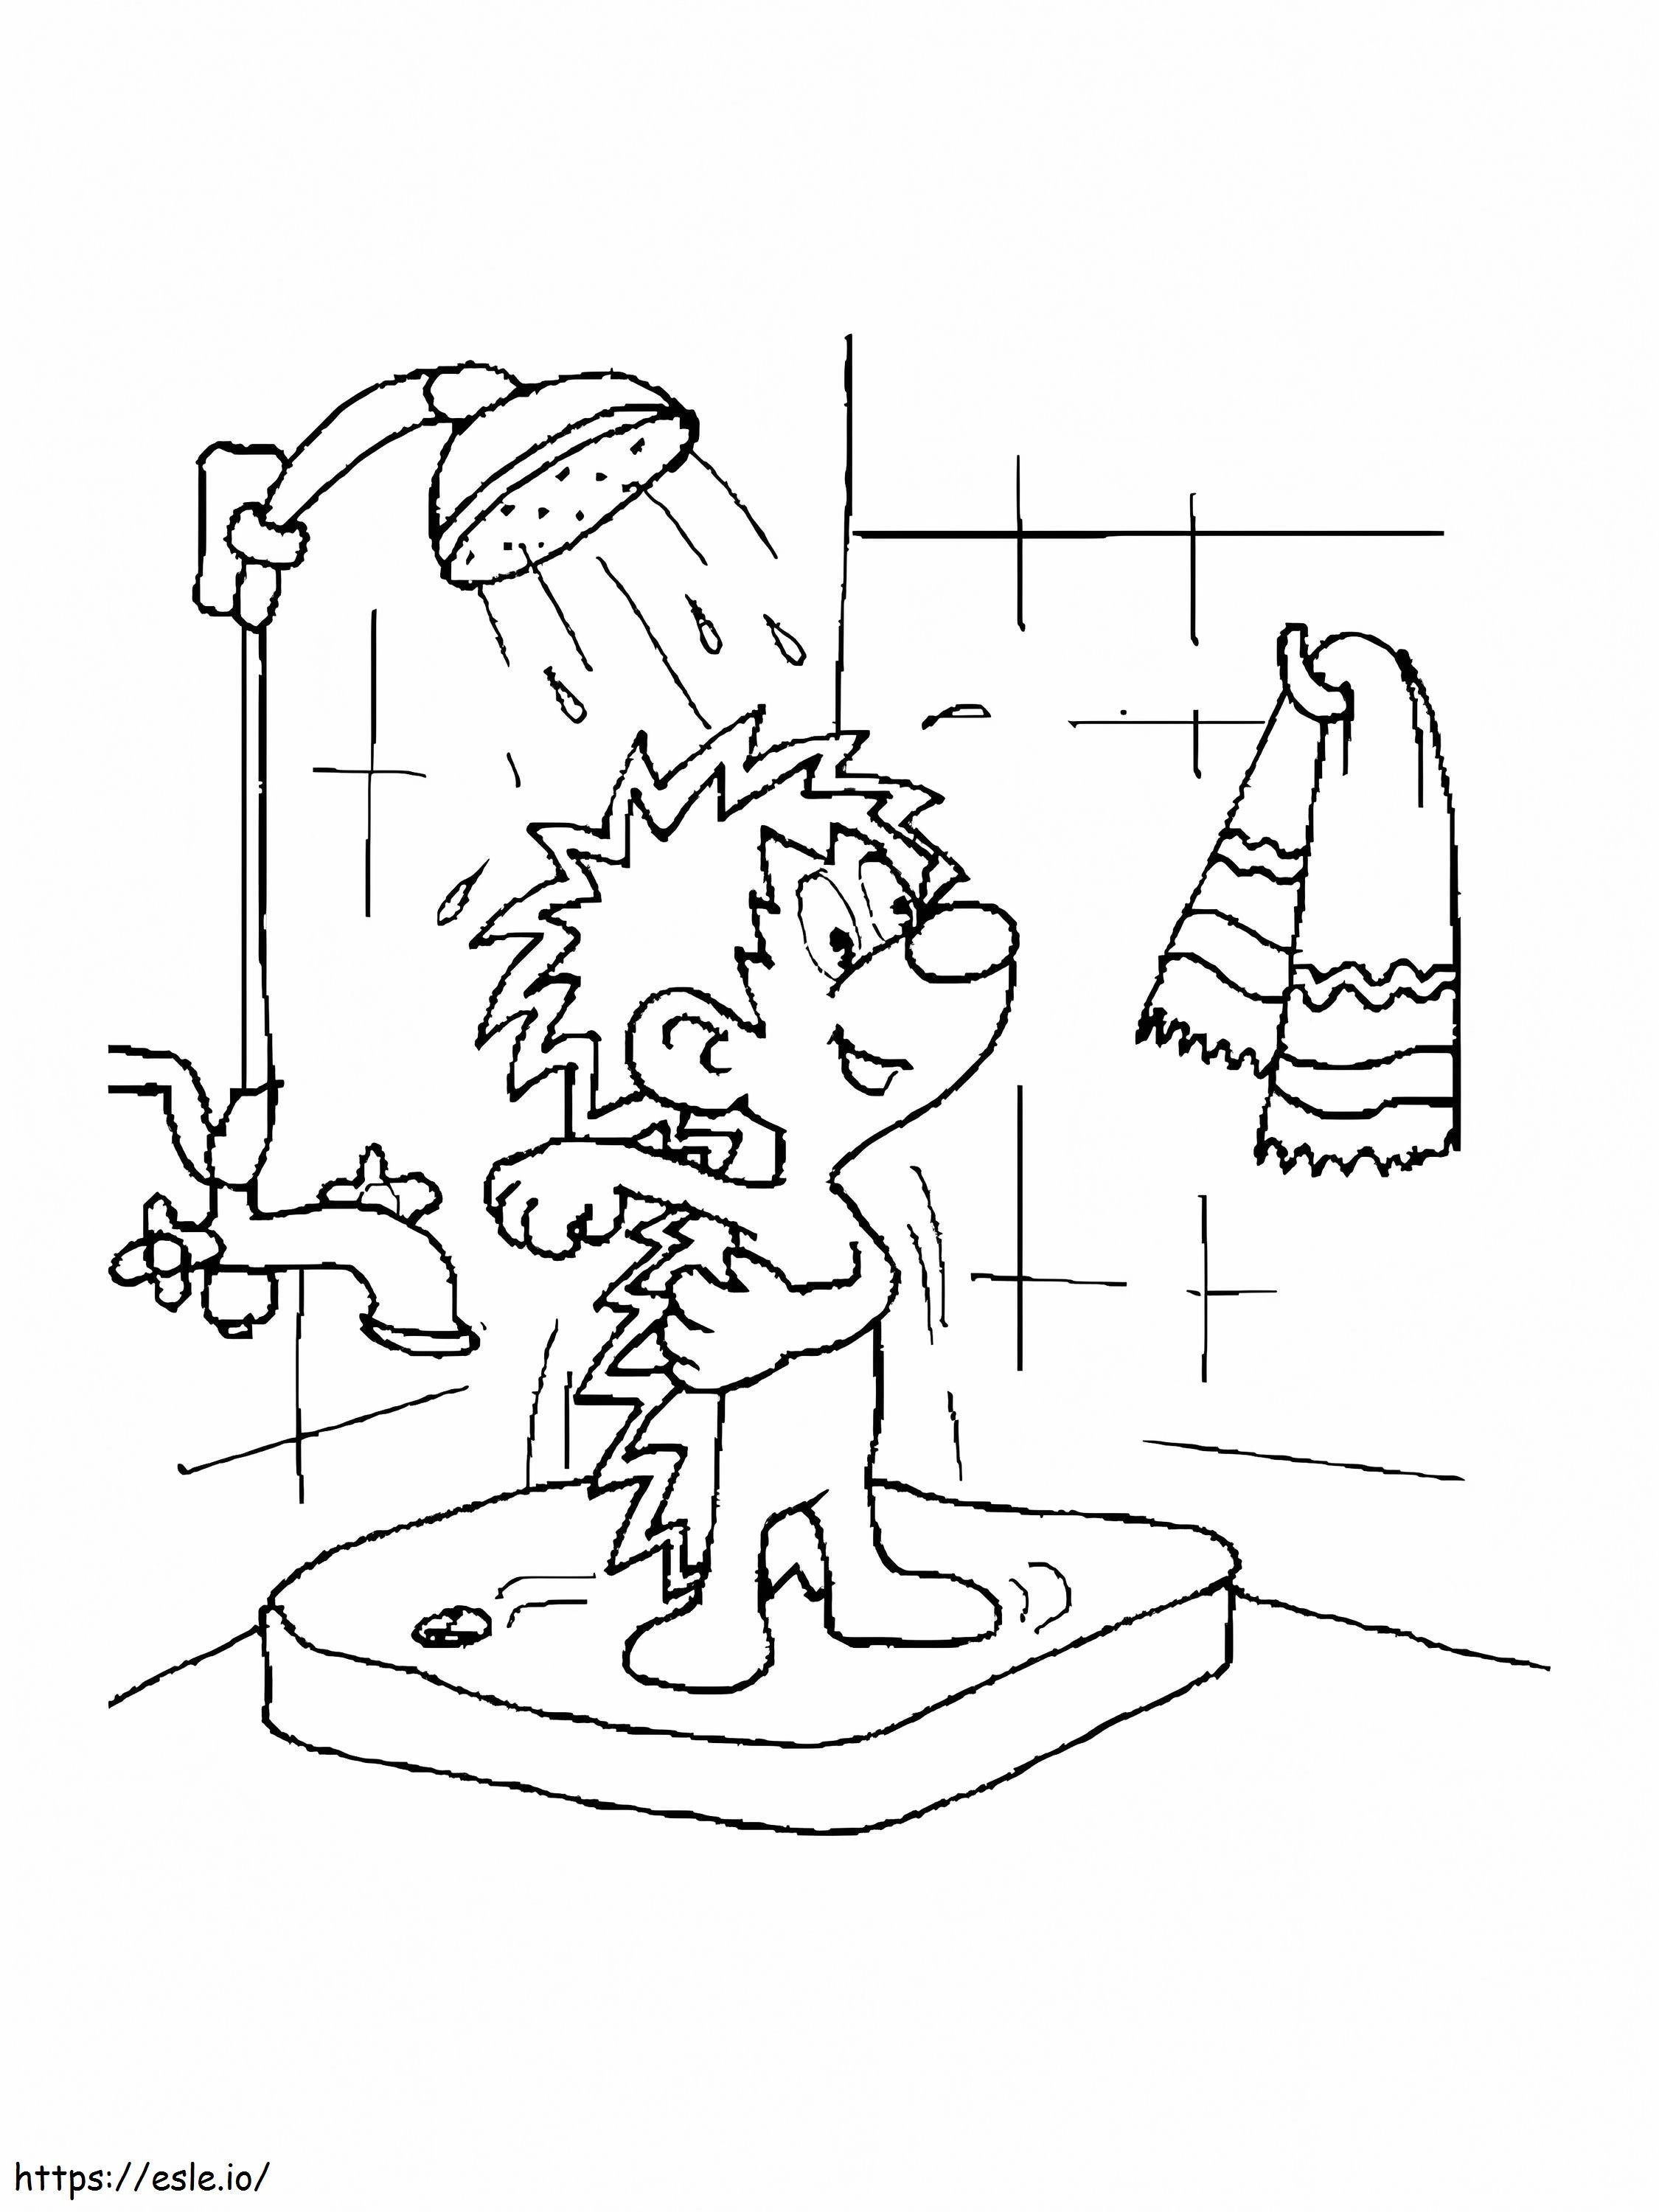 Hedgehog Practice Hygiene coloring page